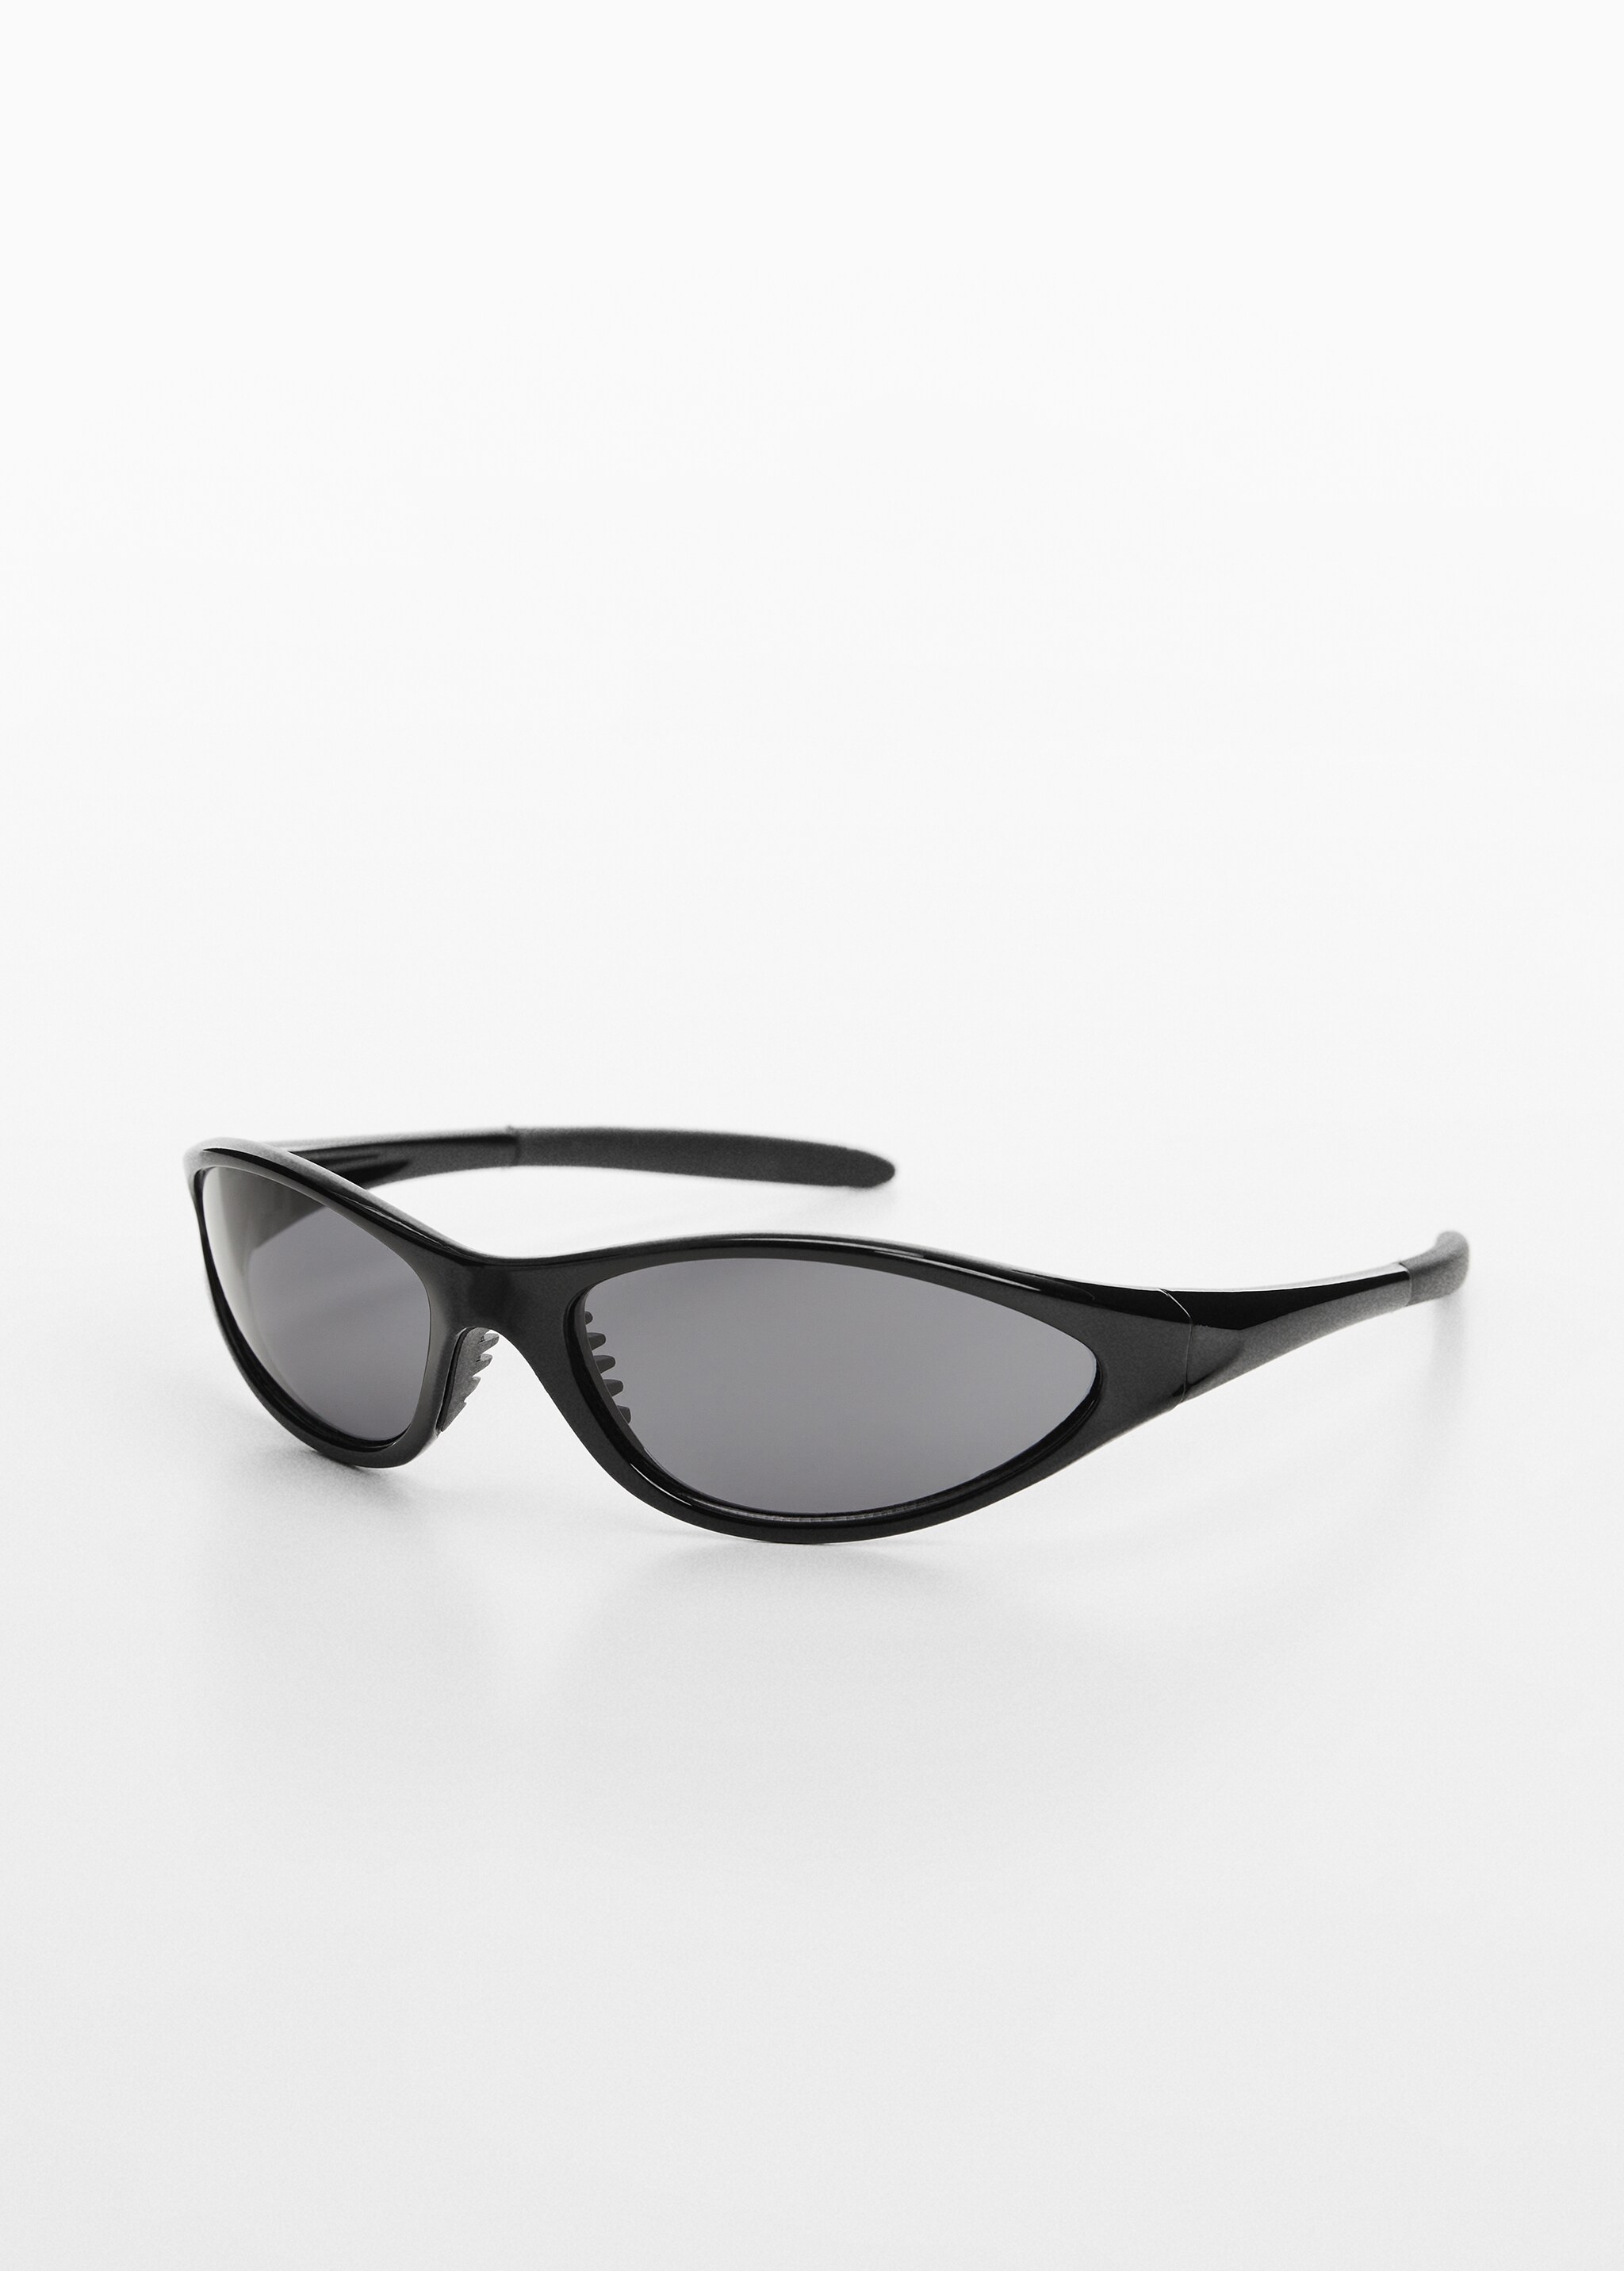 Curved frame sunglasses - Medium plane